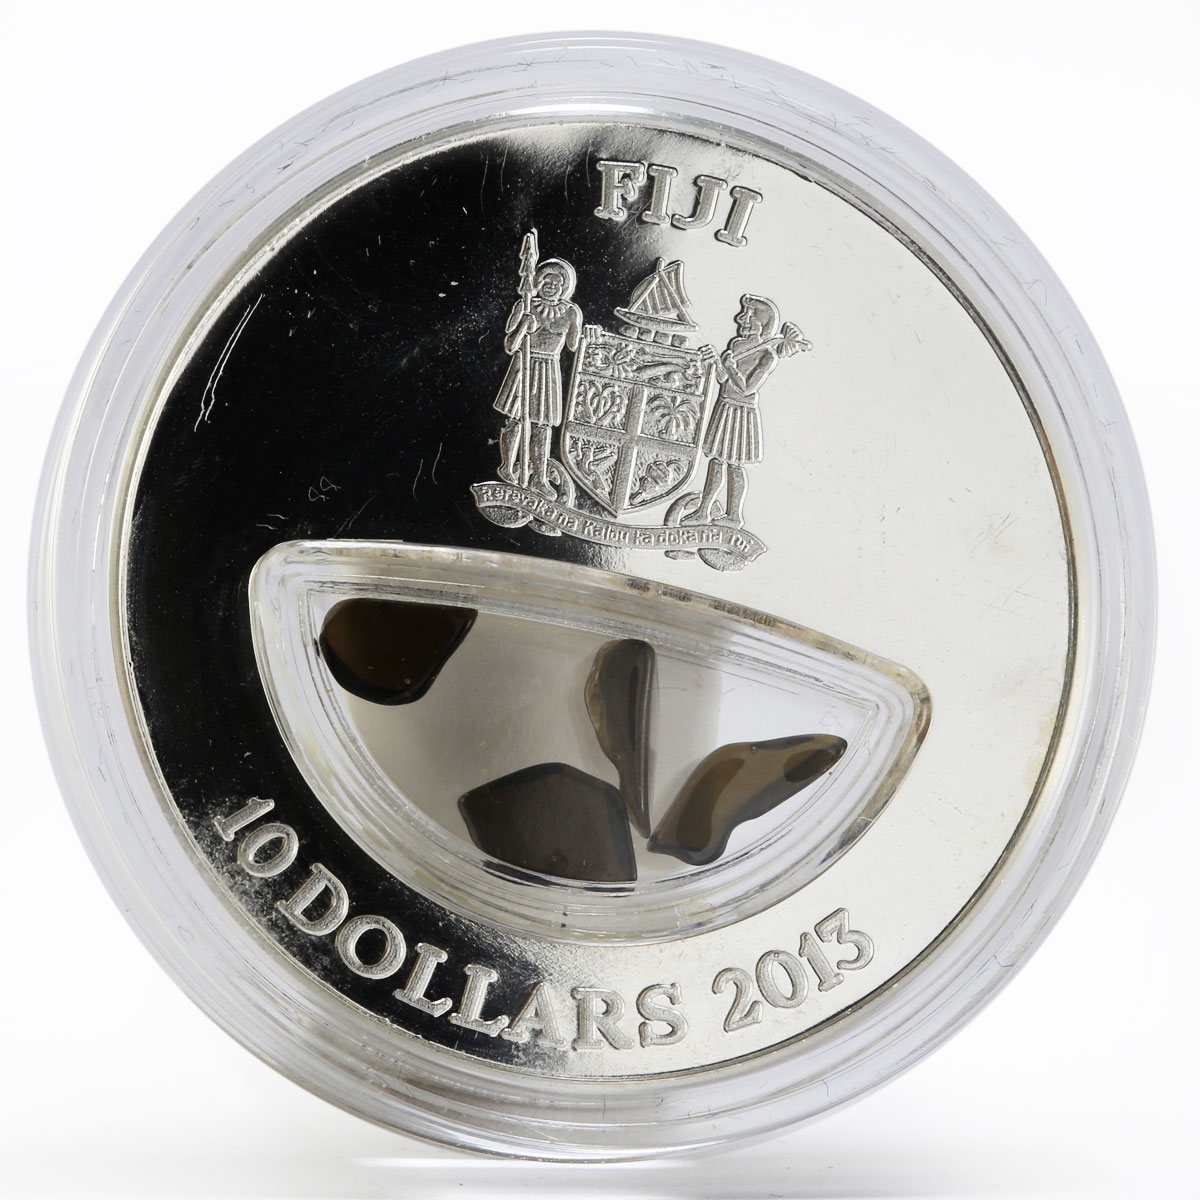 Fiji 10 dollars Meteorites Morasko Poland 1914 colored proof silver coin 2013